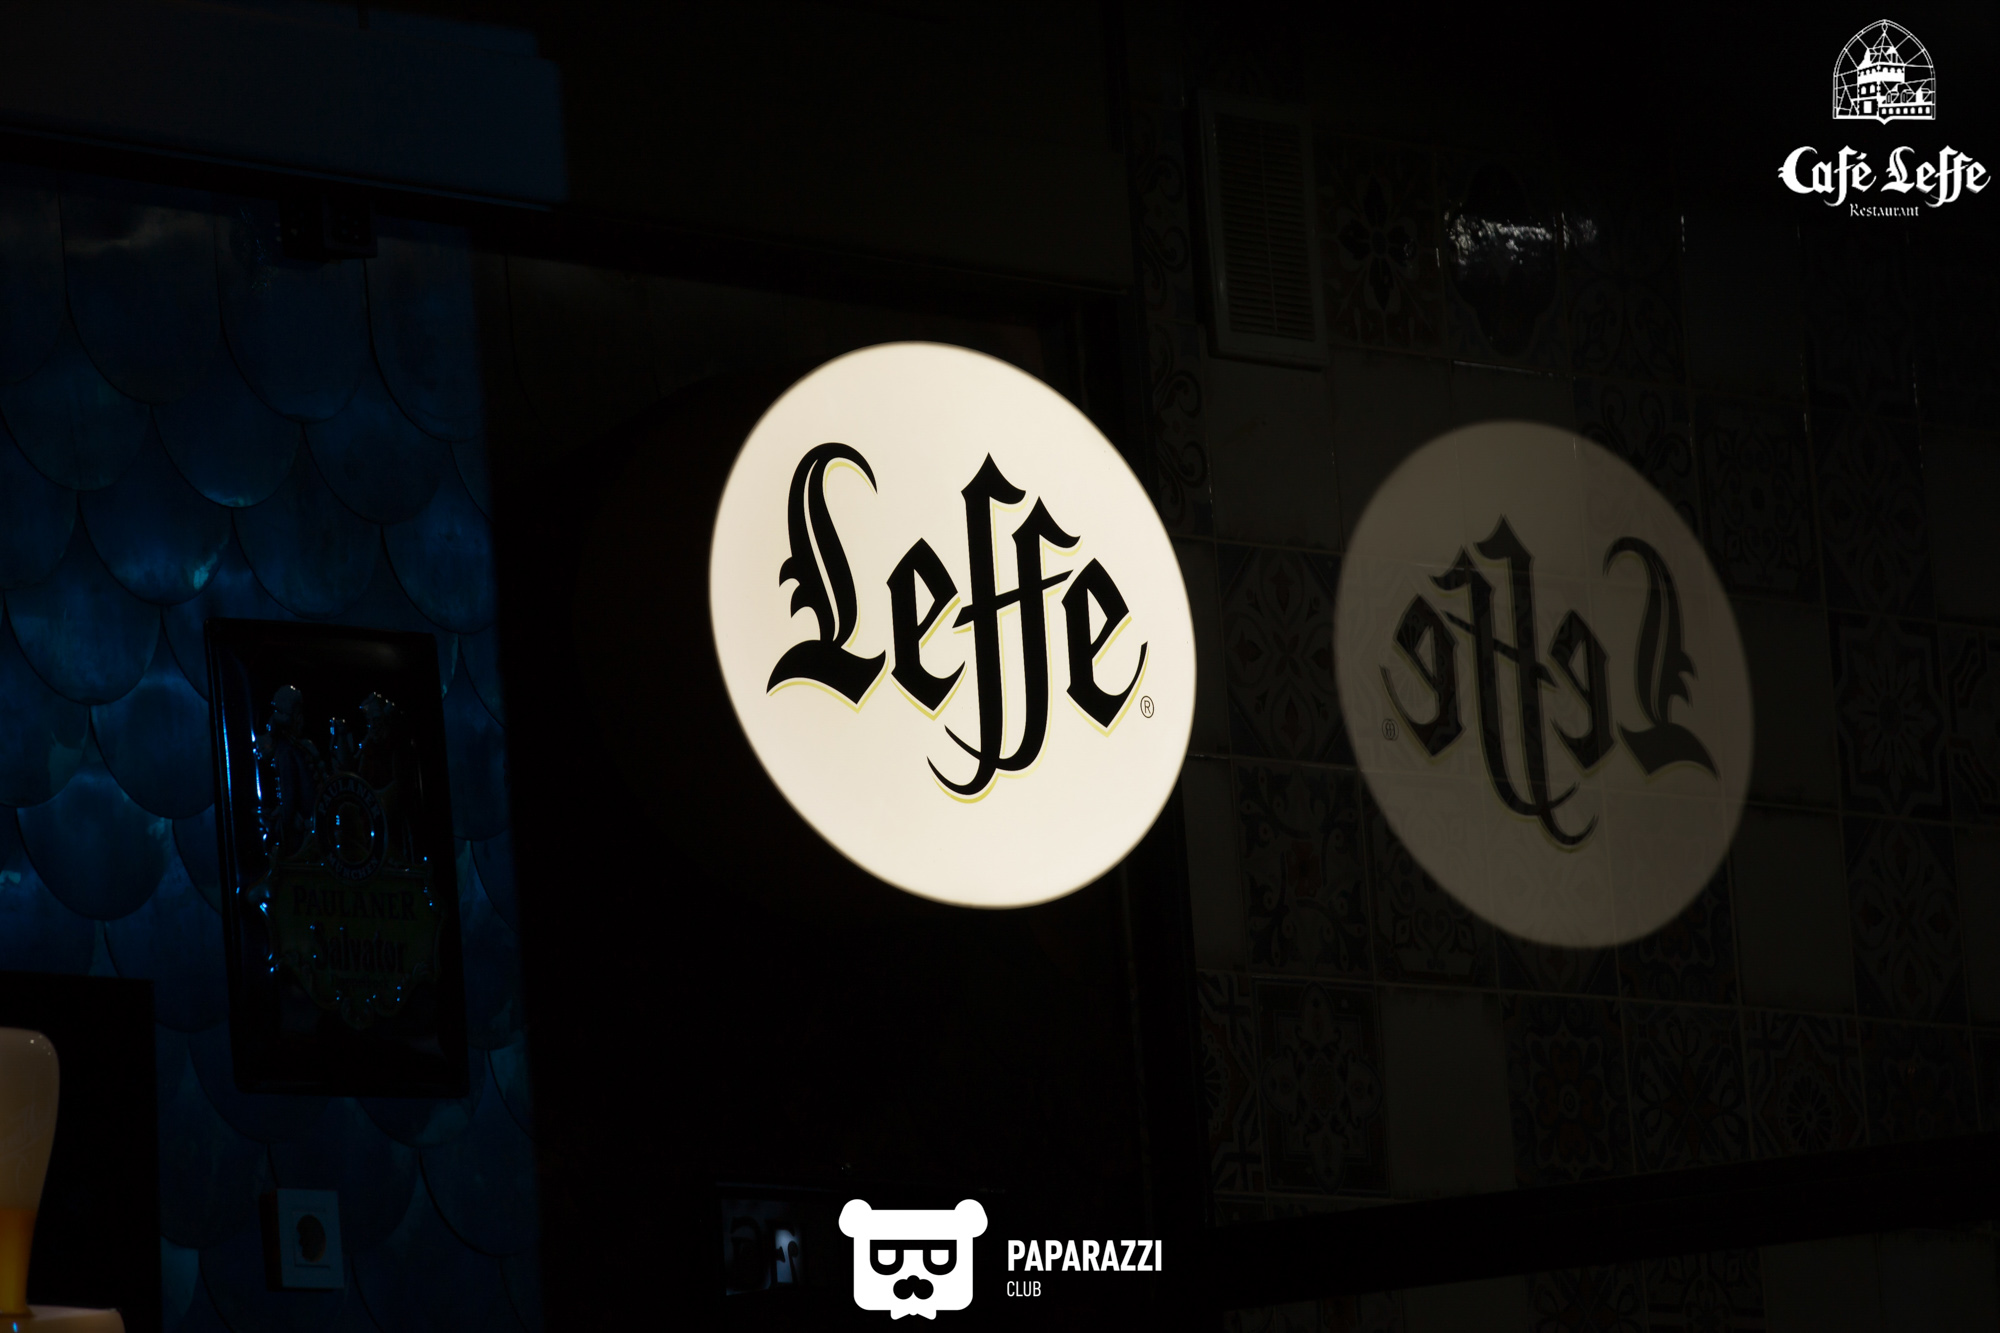 Cafe Leffe